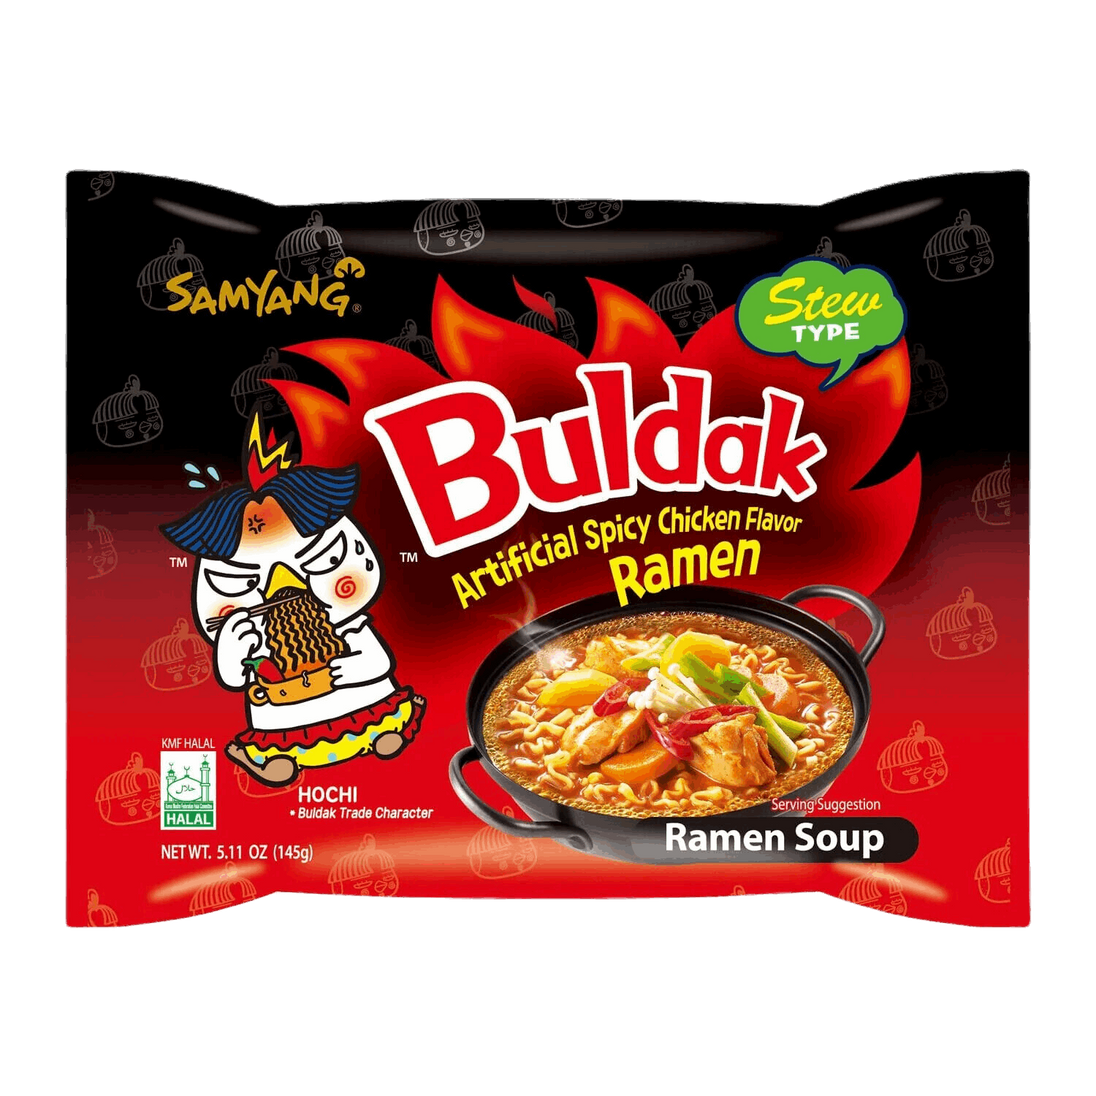 Samyang Buldak Hot Chicken Flavor Ramen “Stew Type”